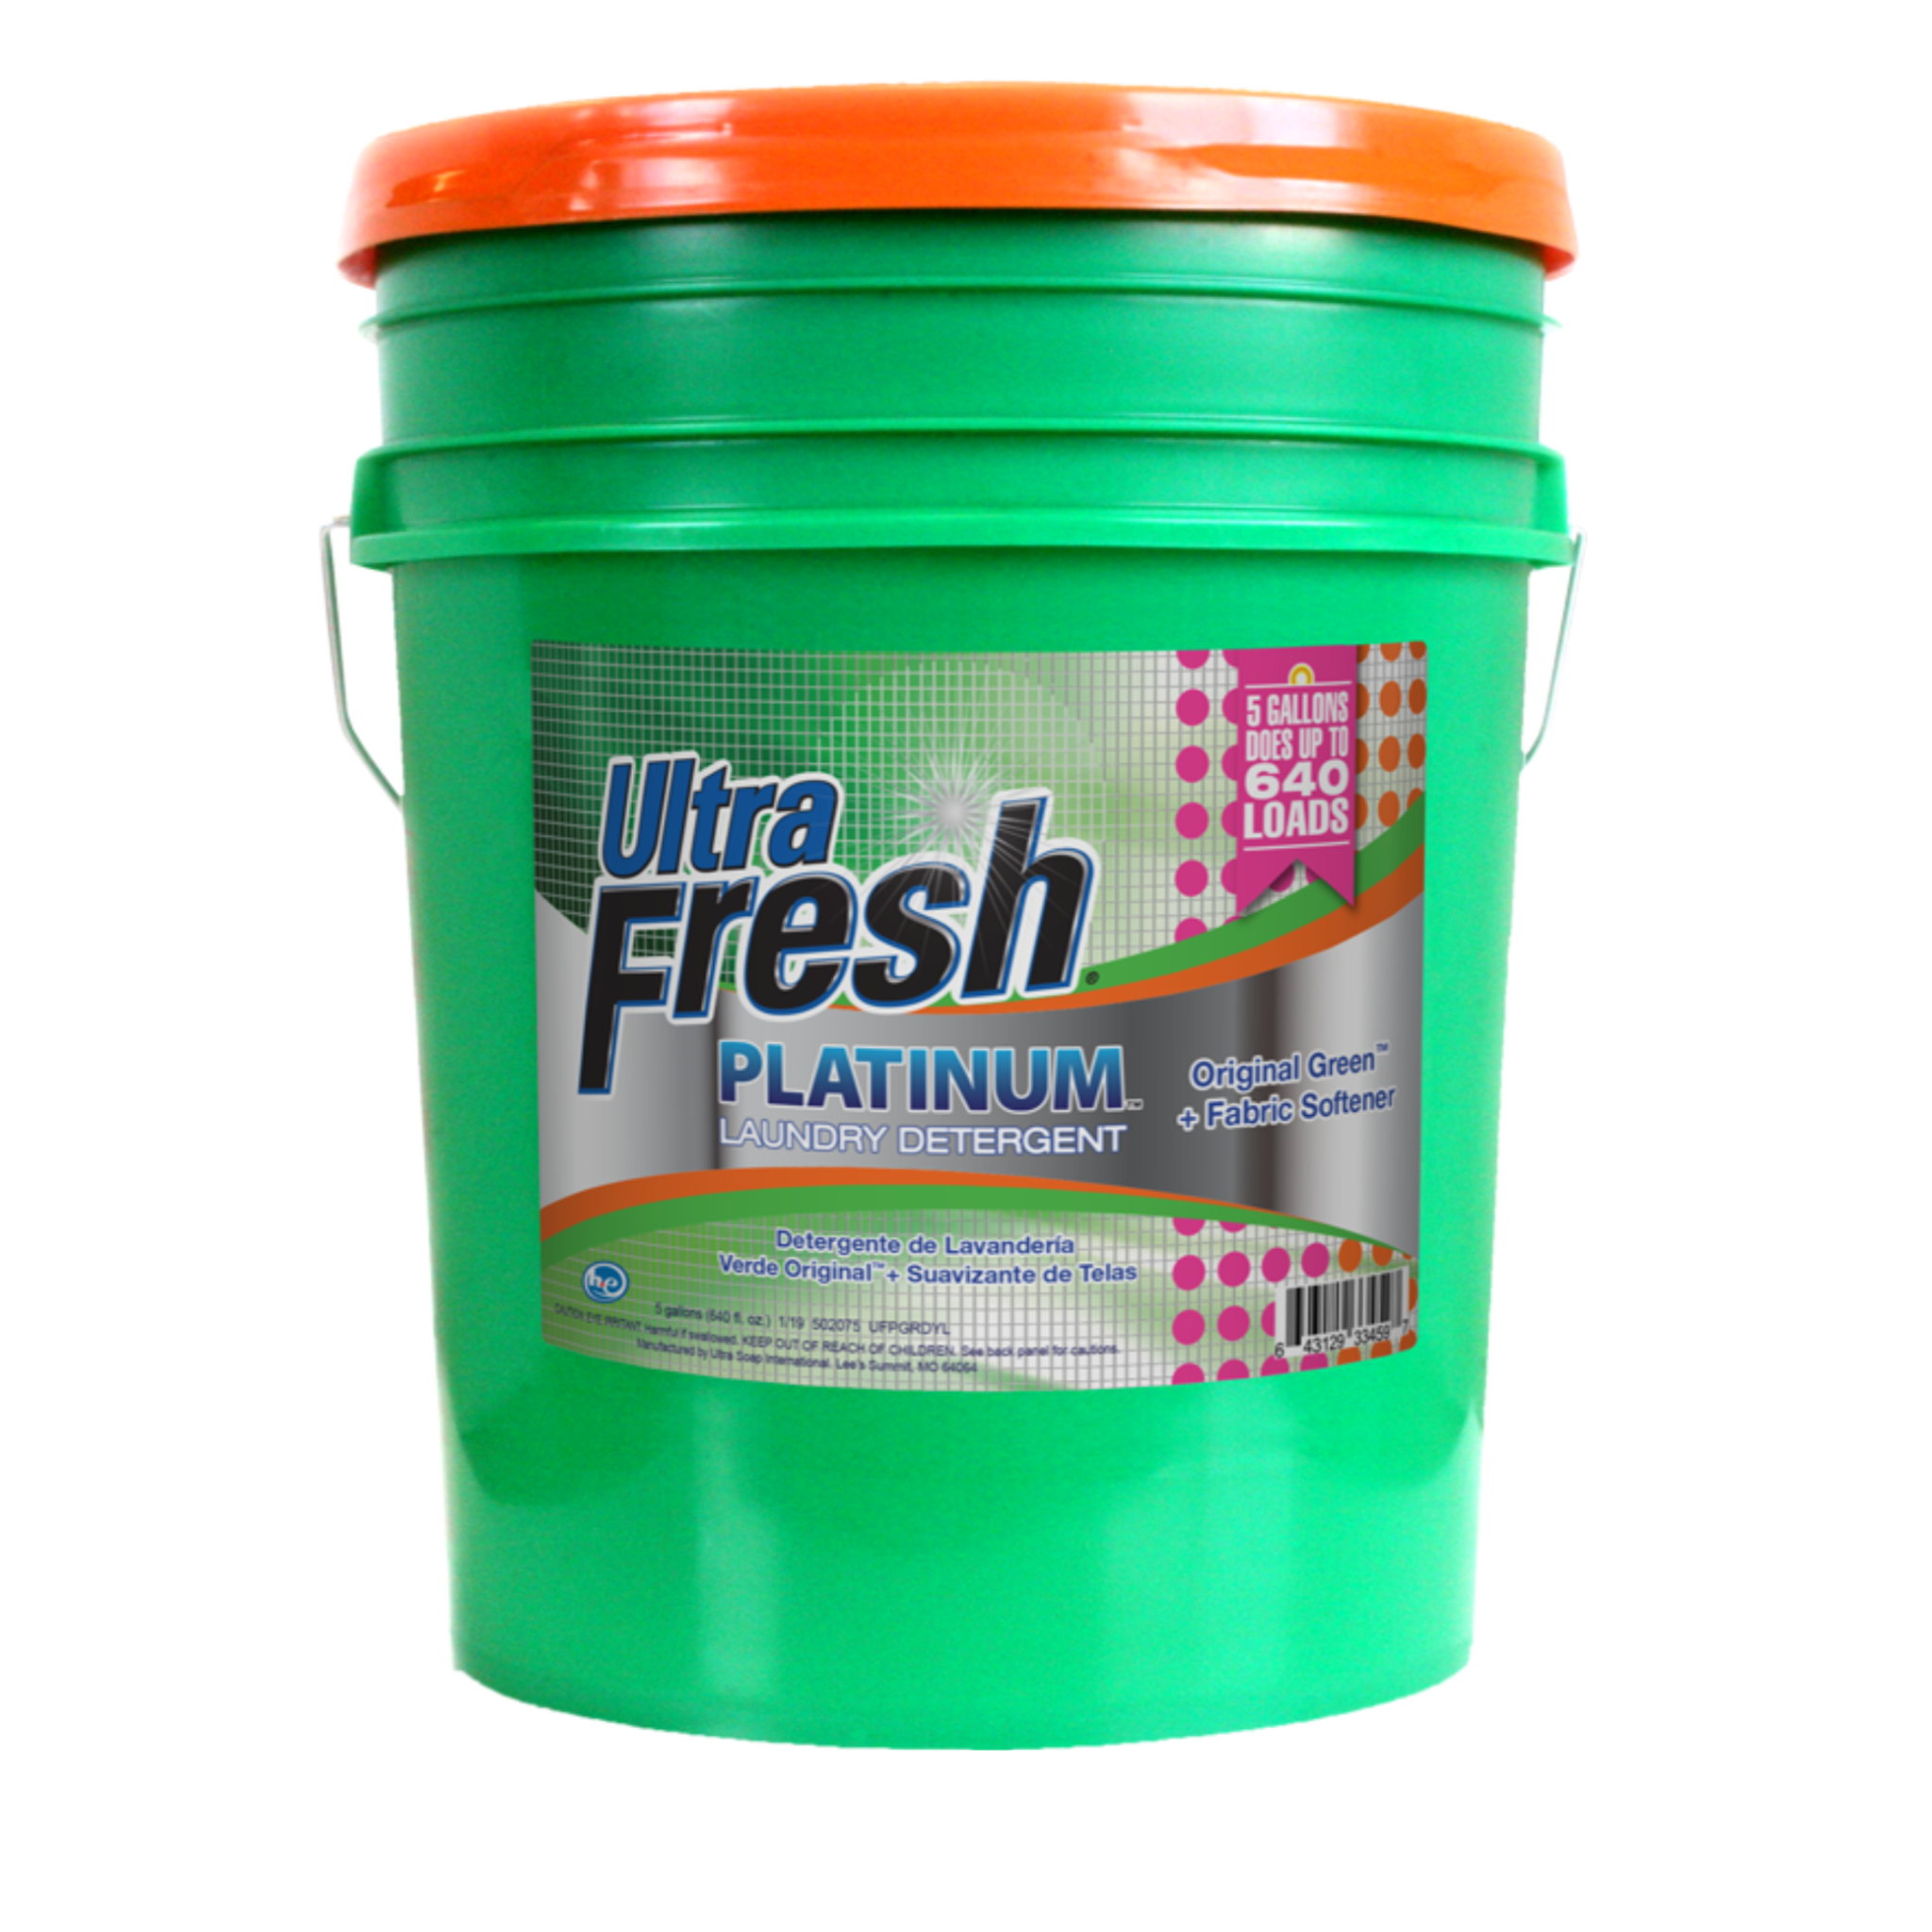 Ultra Fresh Platinum Original Green 3X Laundry Detergent + Fabric Softener - 5 Gallons